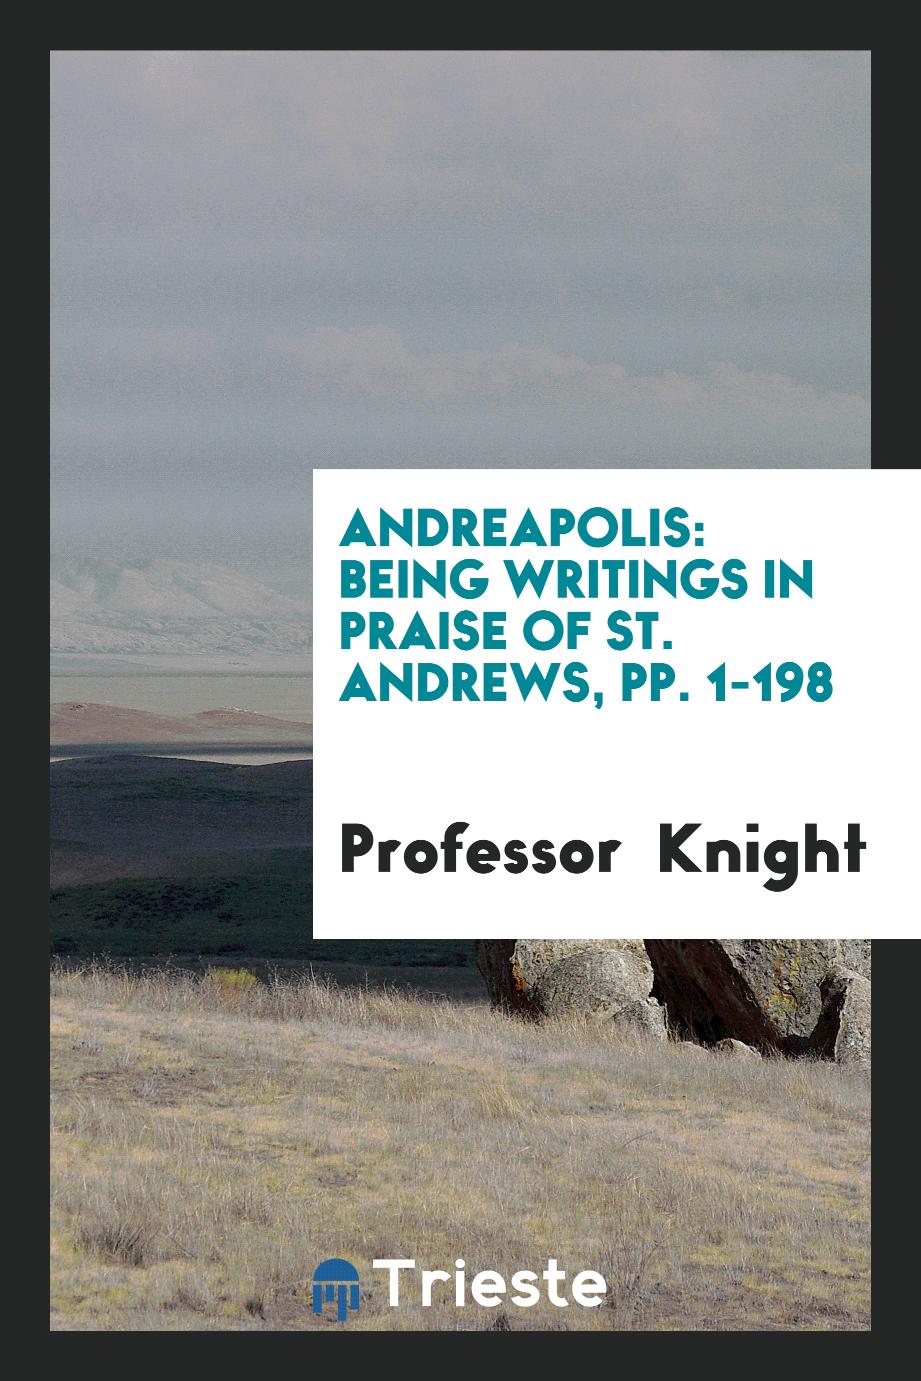 Andreapolis: Being Writings in Praise of St. Andrews, pp. 1-198